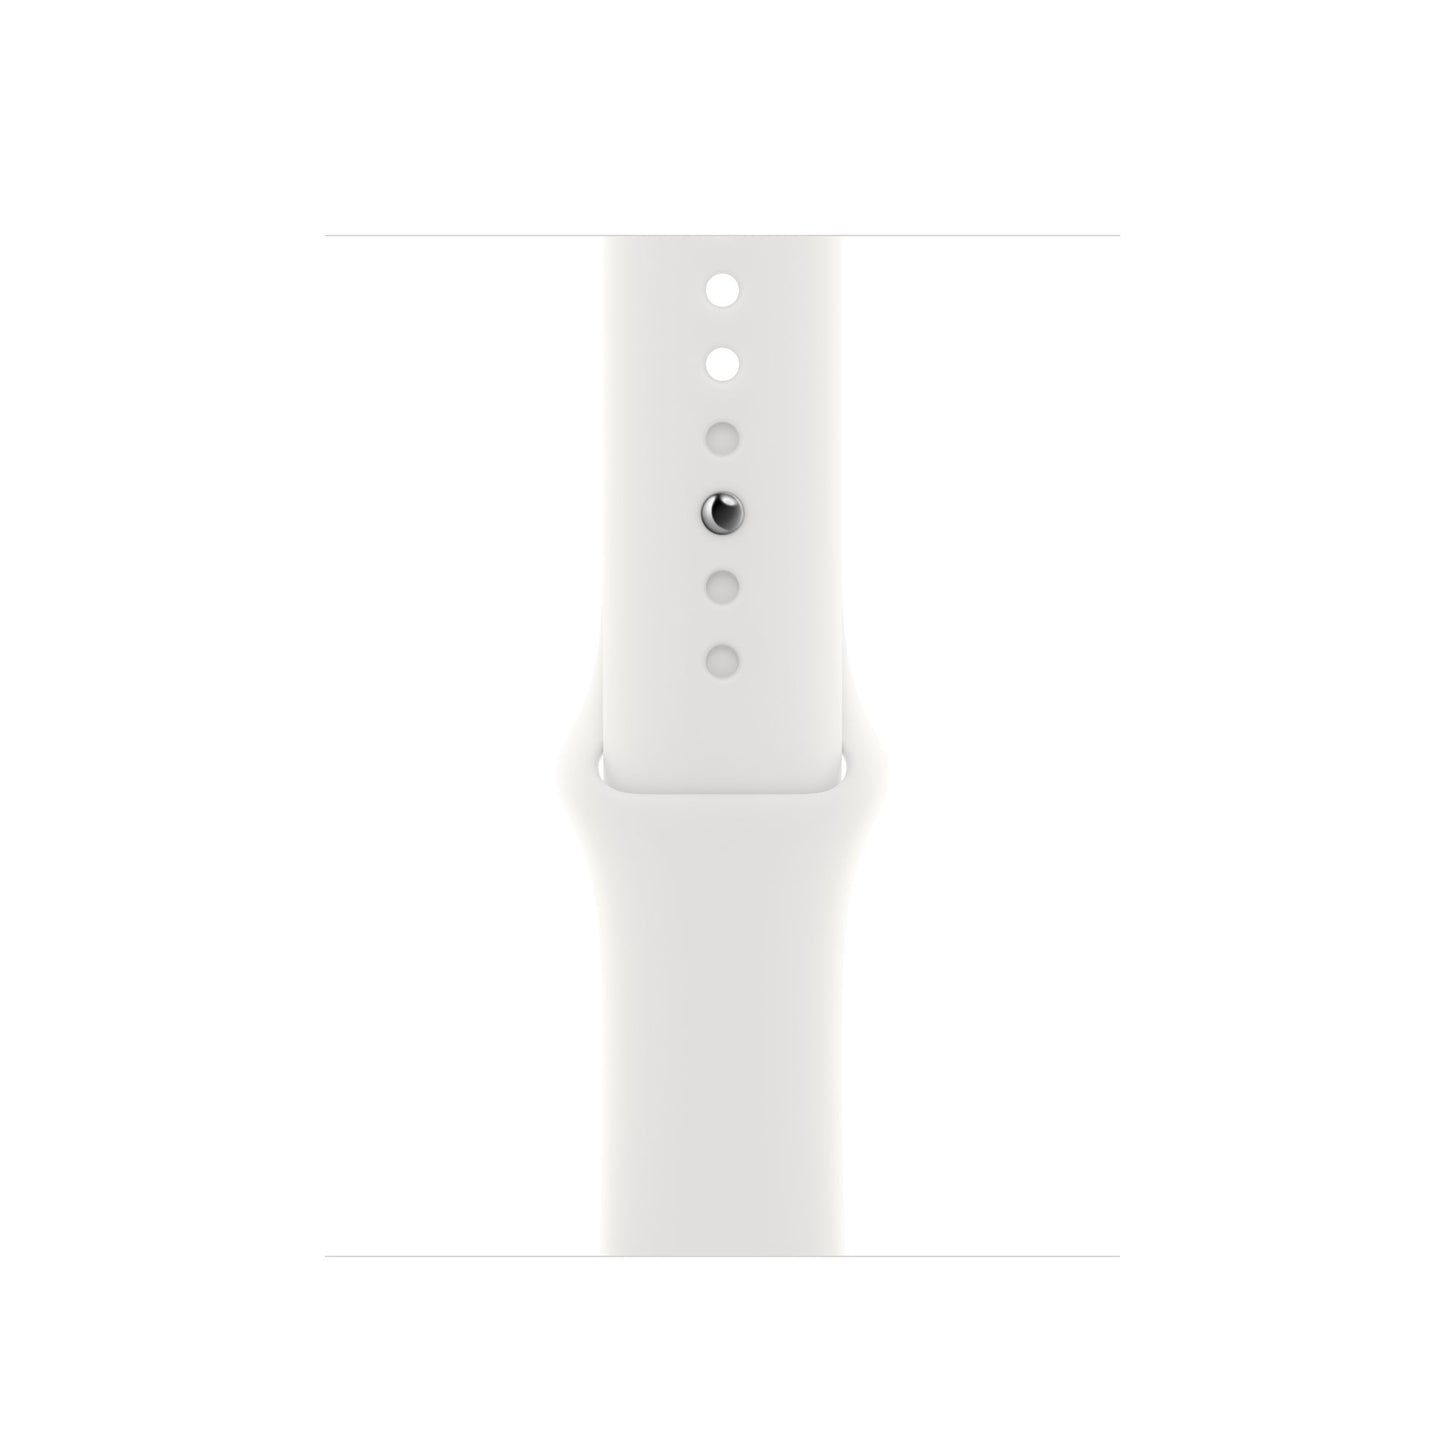 Apple MP6V3ZM/A Smart Wearable Accessories Band White Fluoroelastomer